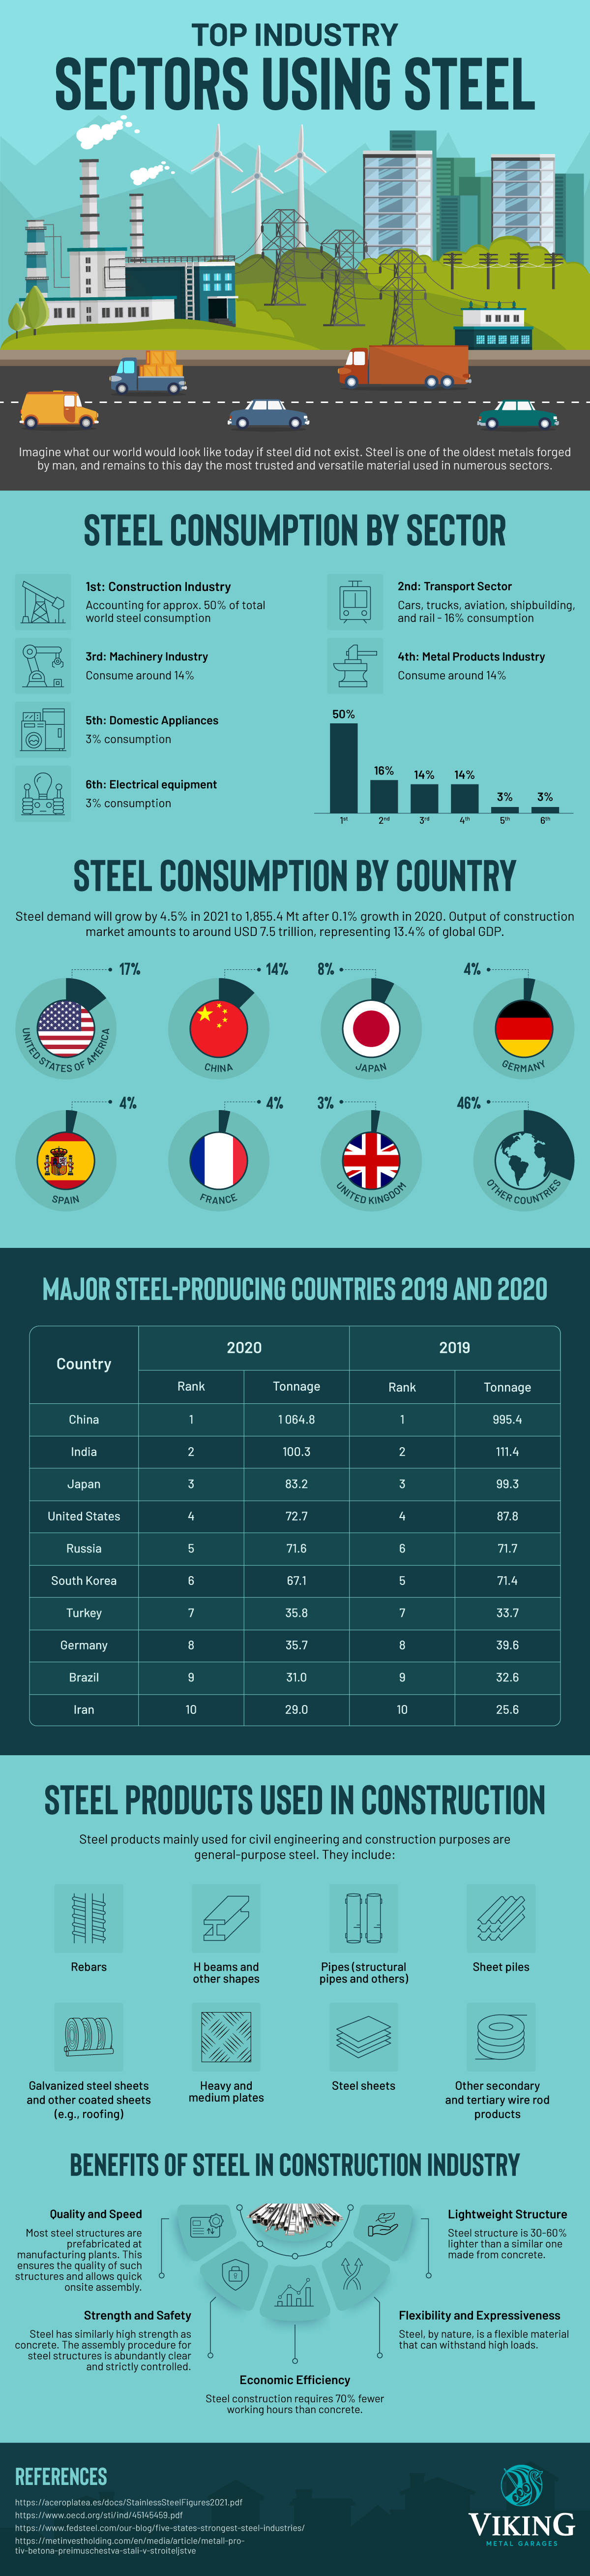 Top Industry Sector Using Steel